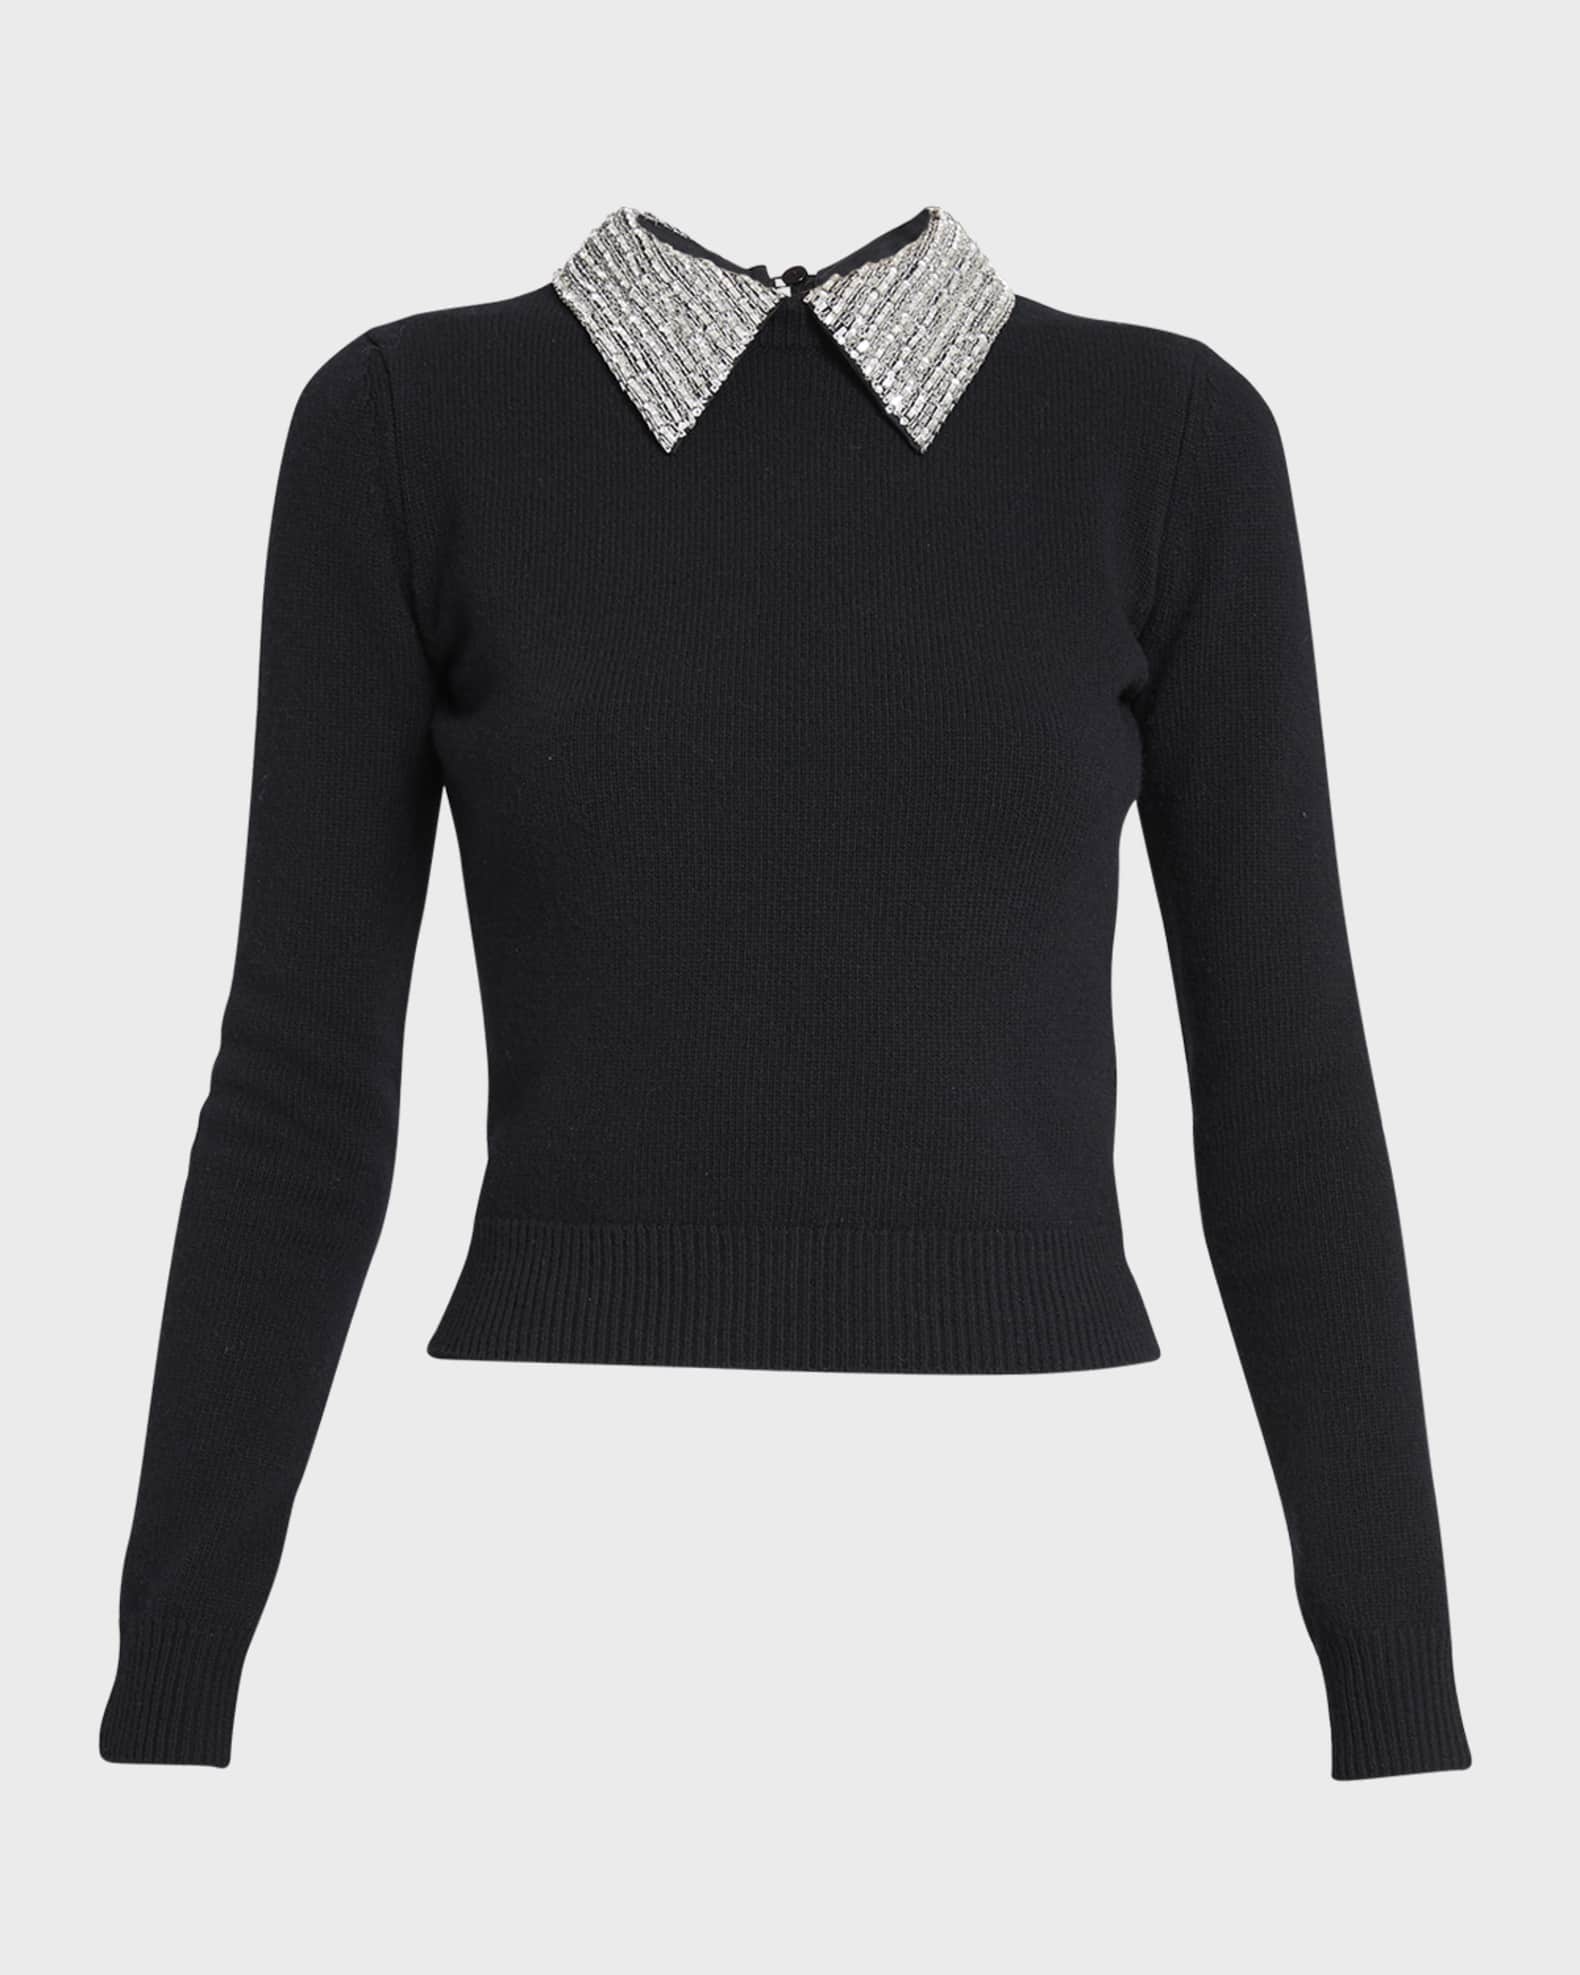 Valentino Garavani Beaded Collared Crop Wool Sweater | Neiman Marcus